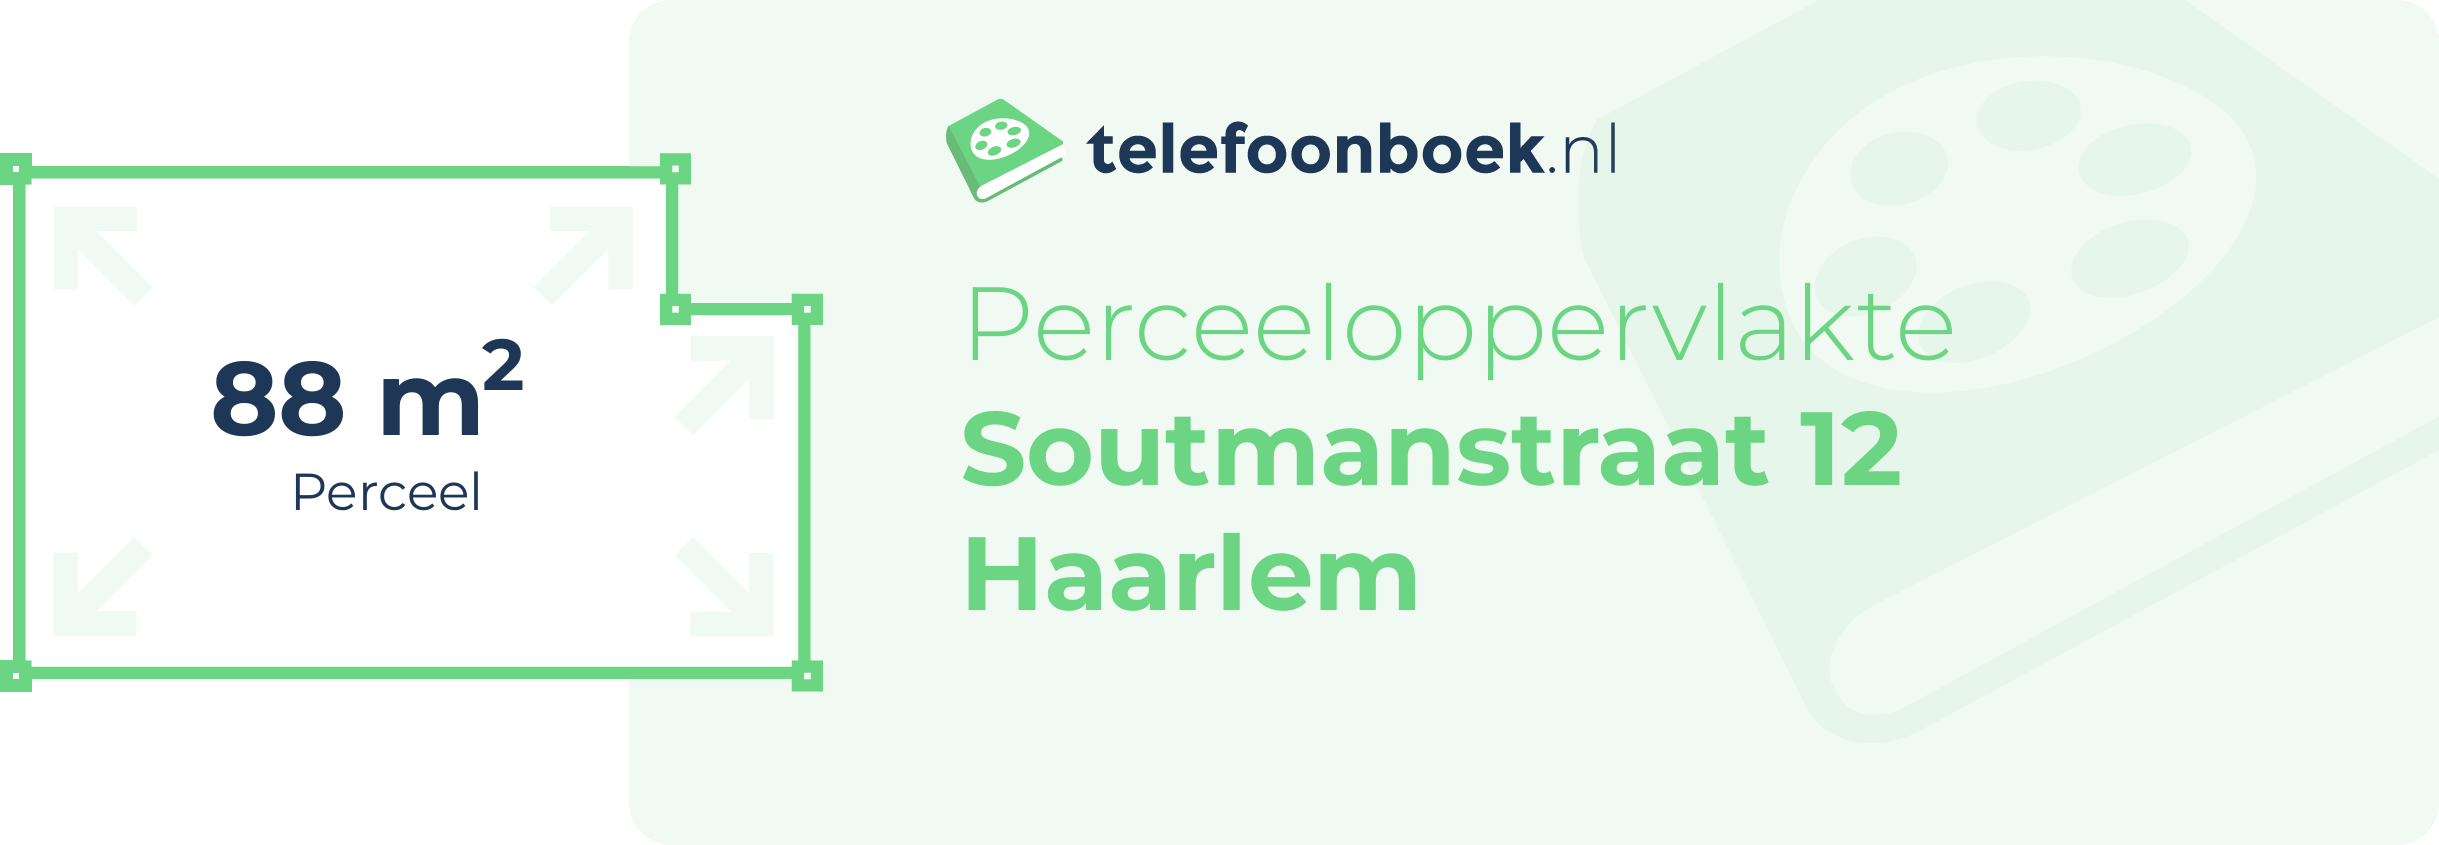 Perceeloppervlakte Soutmanstraat 12 Haarlem